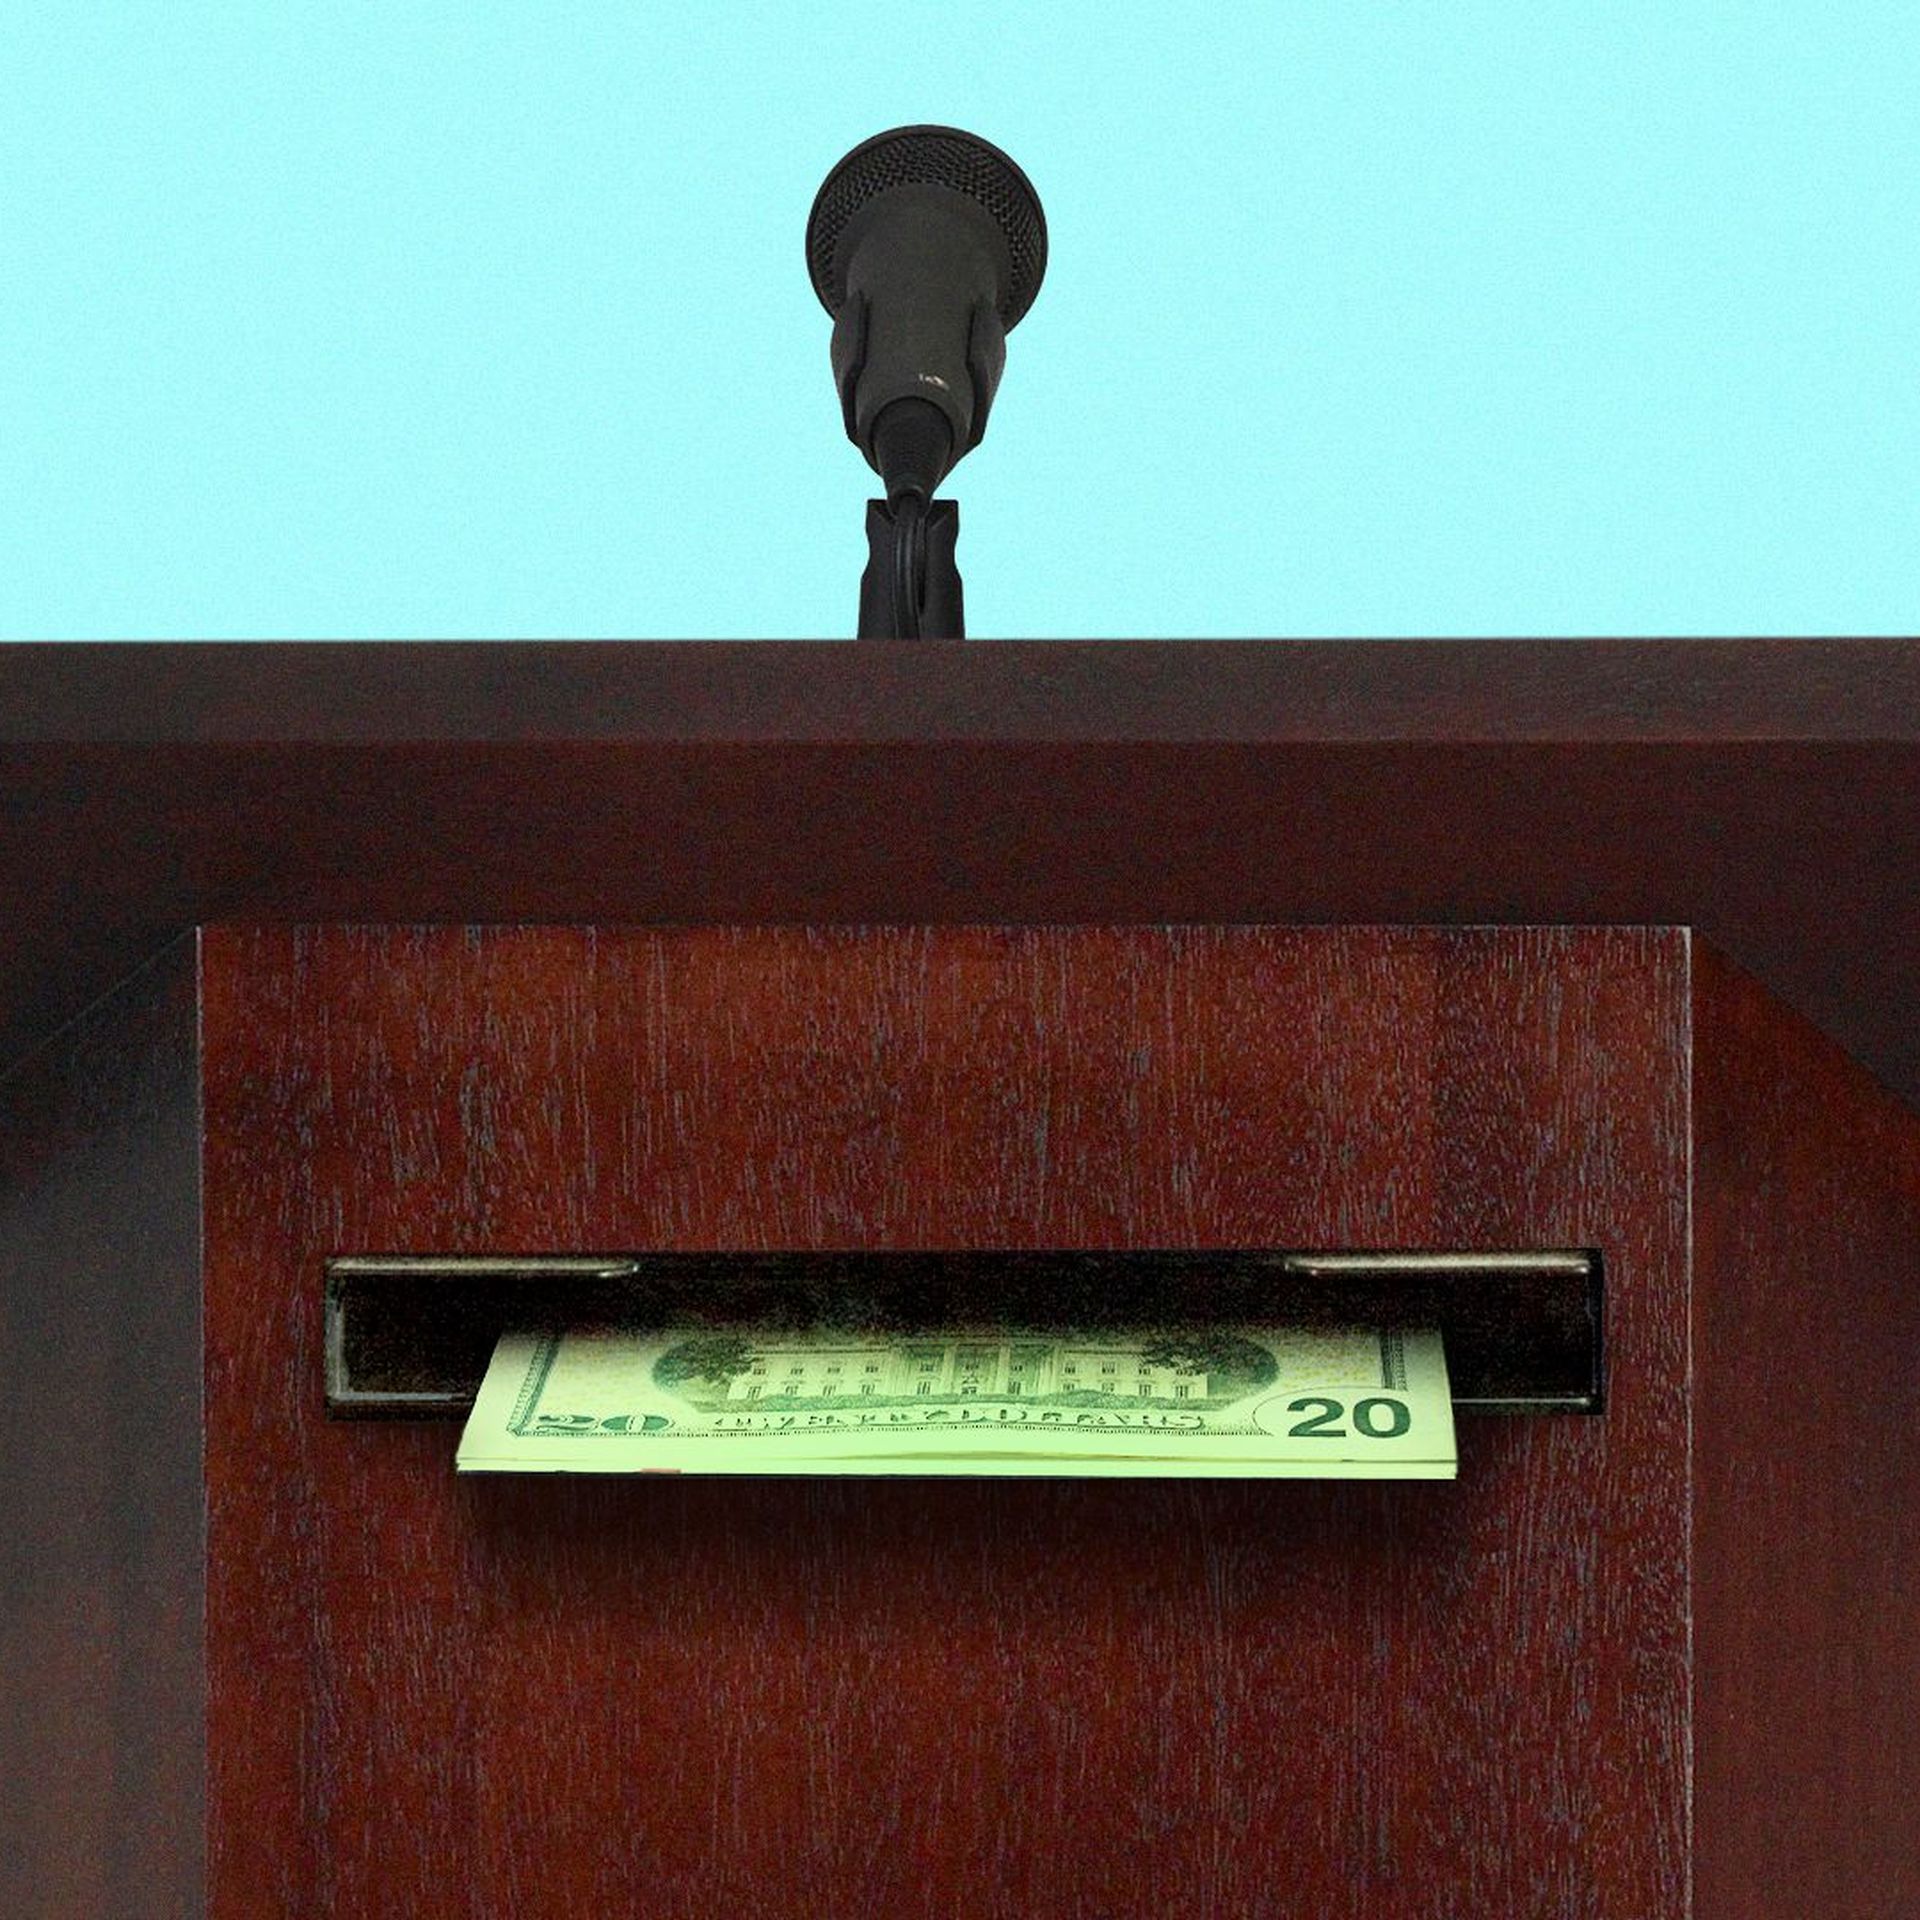 Illustration of a podium with a slot extruding twenty dollar bills